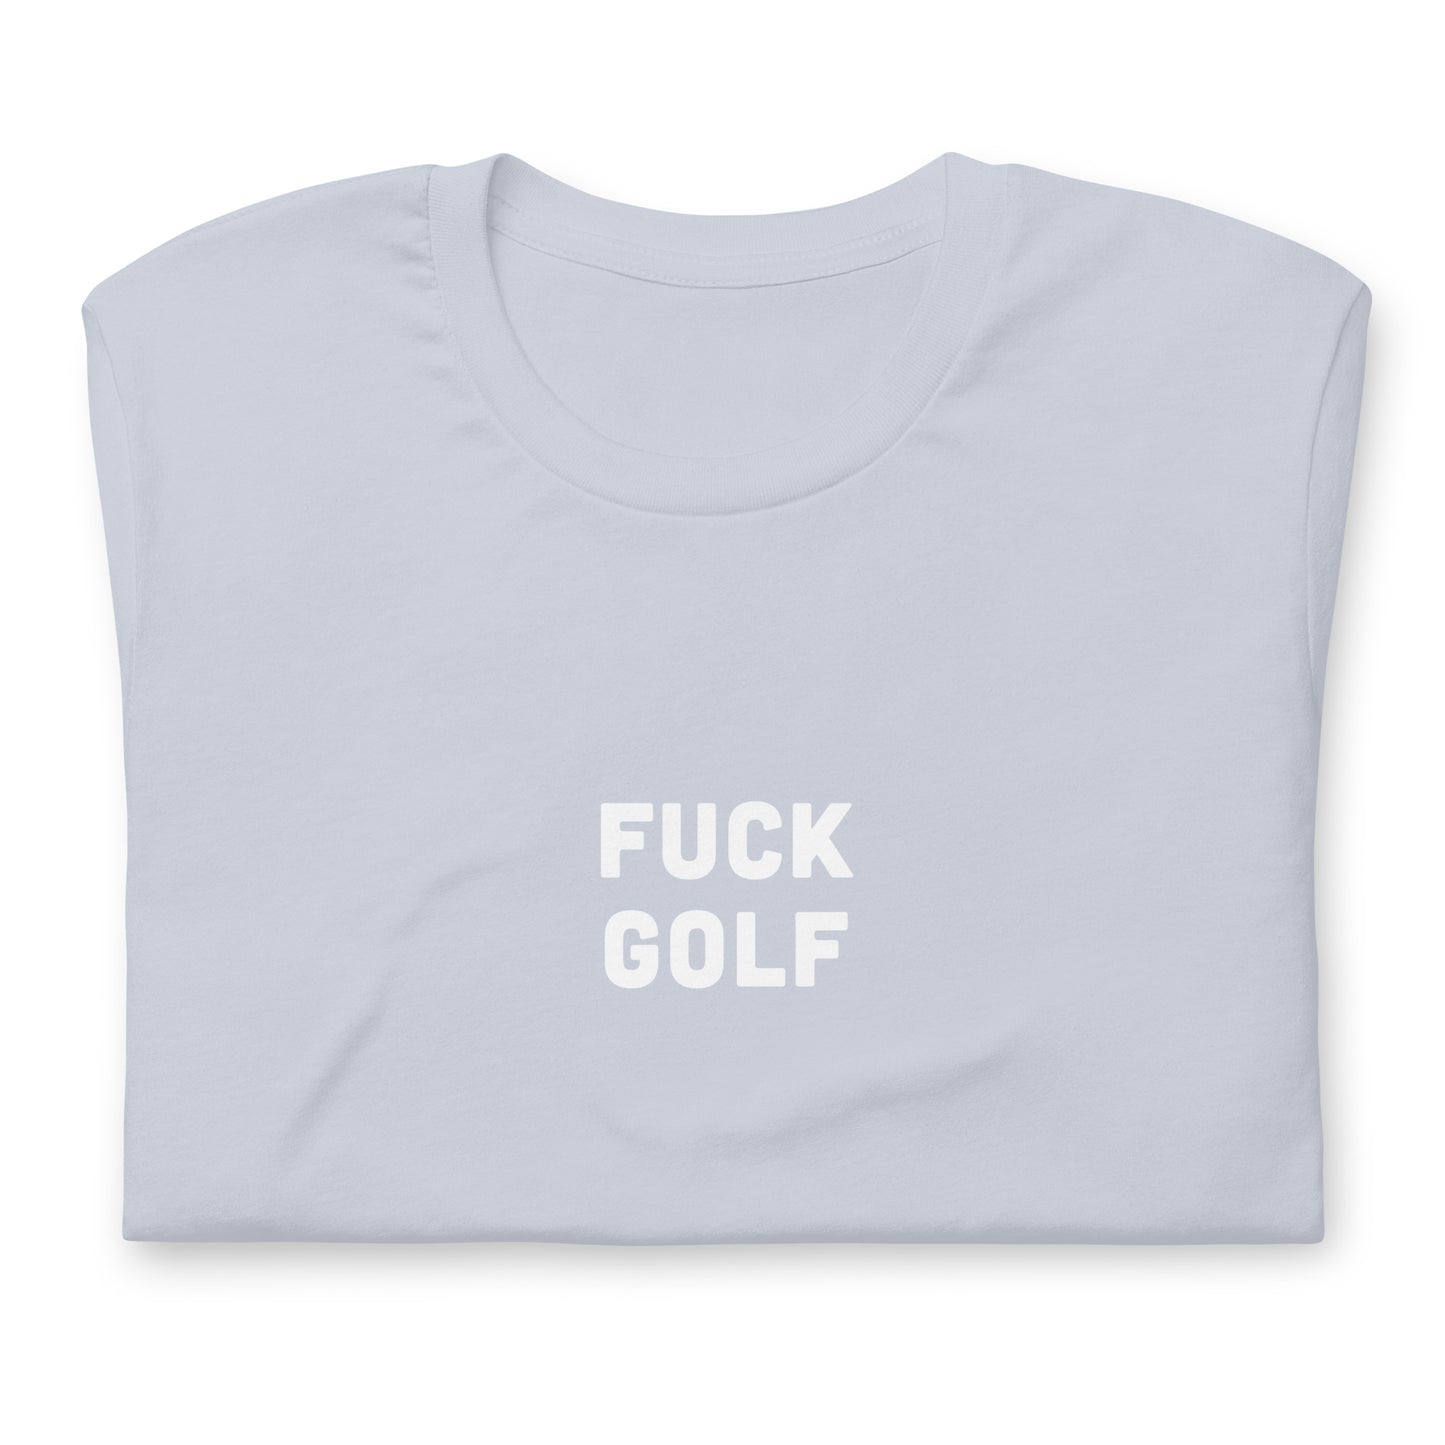 Fuck Golf T-Shirt Size S Color Asphalt